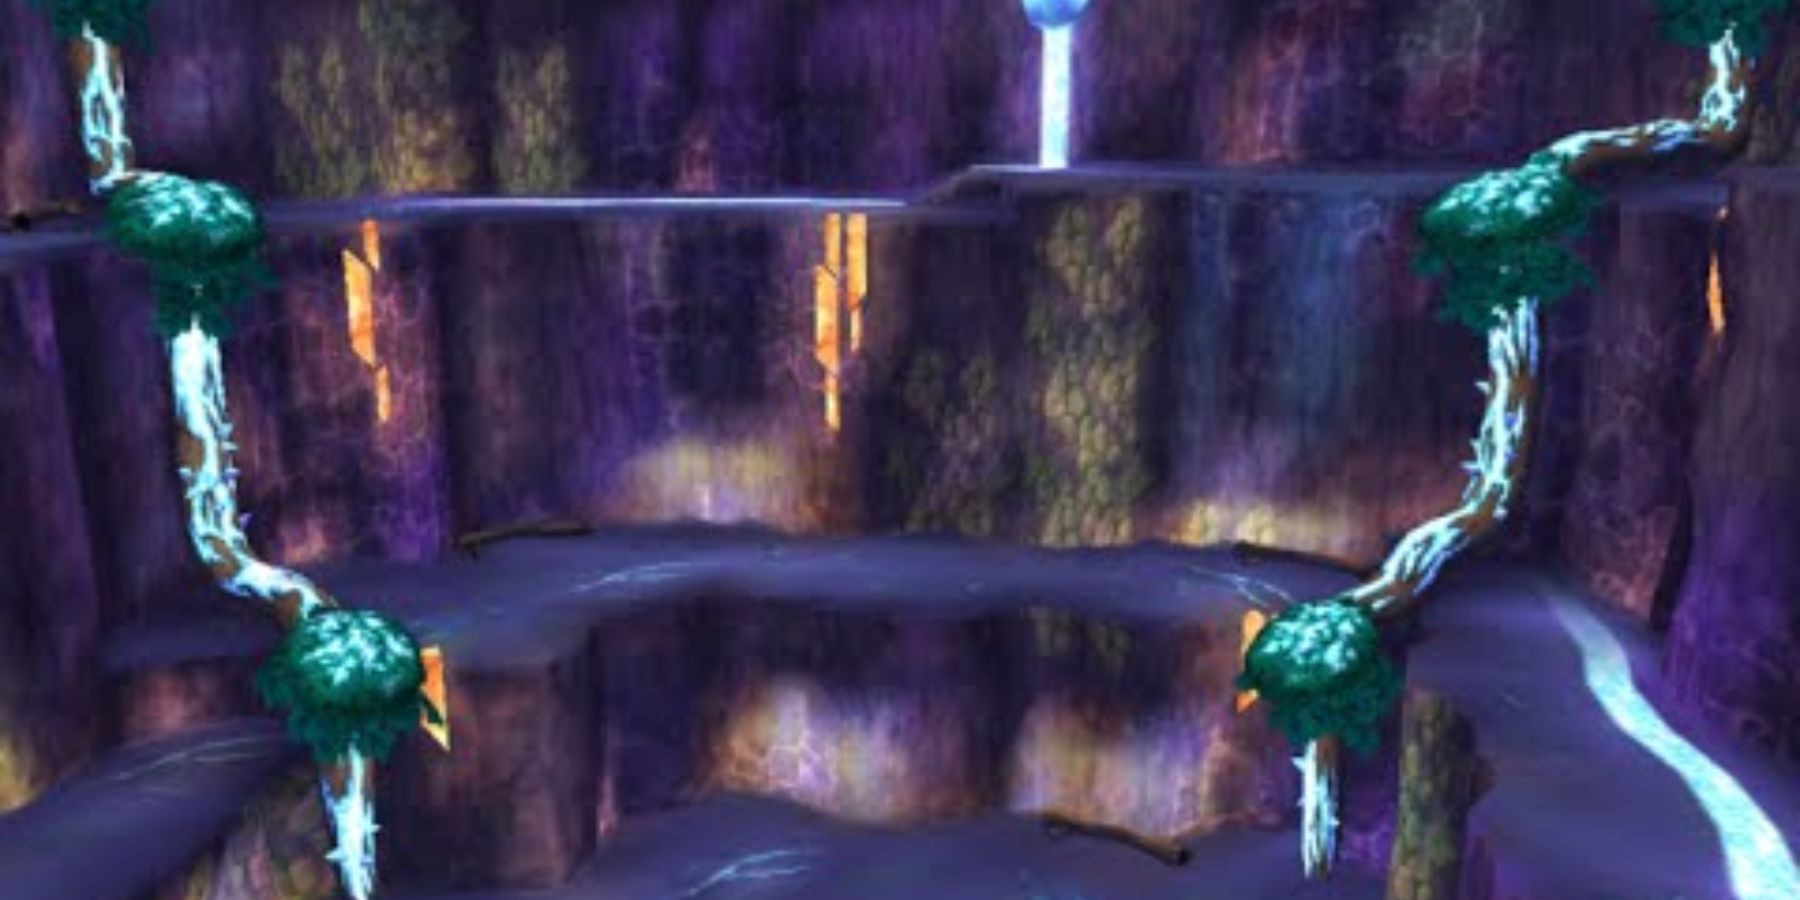 The Crumbling Island in Kingdom Hearts